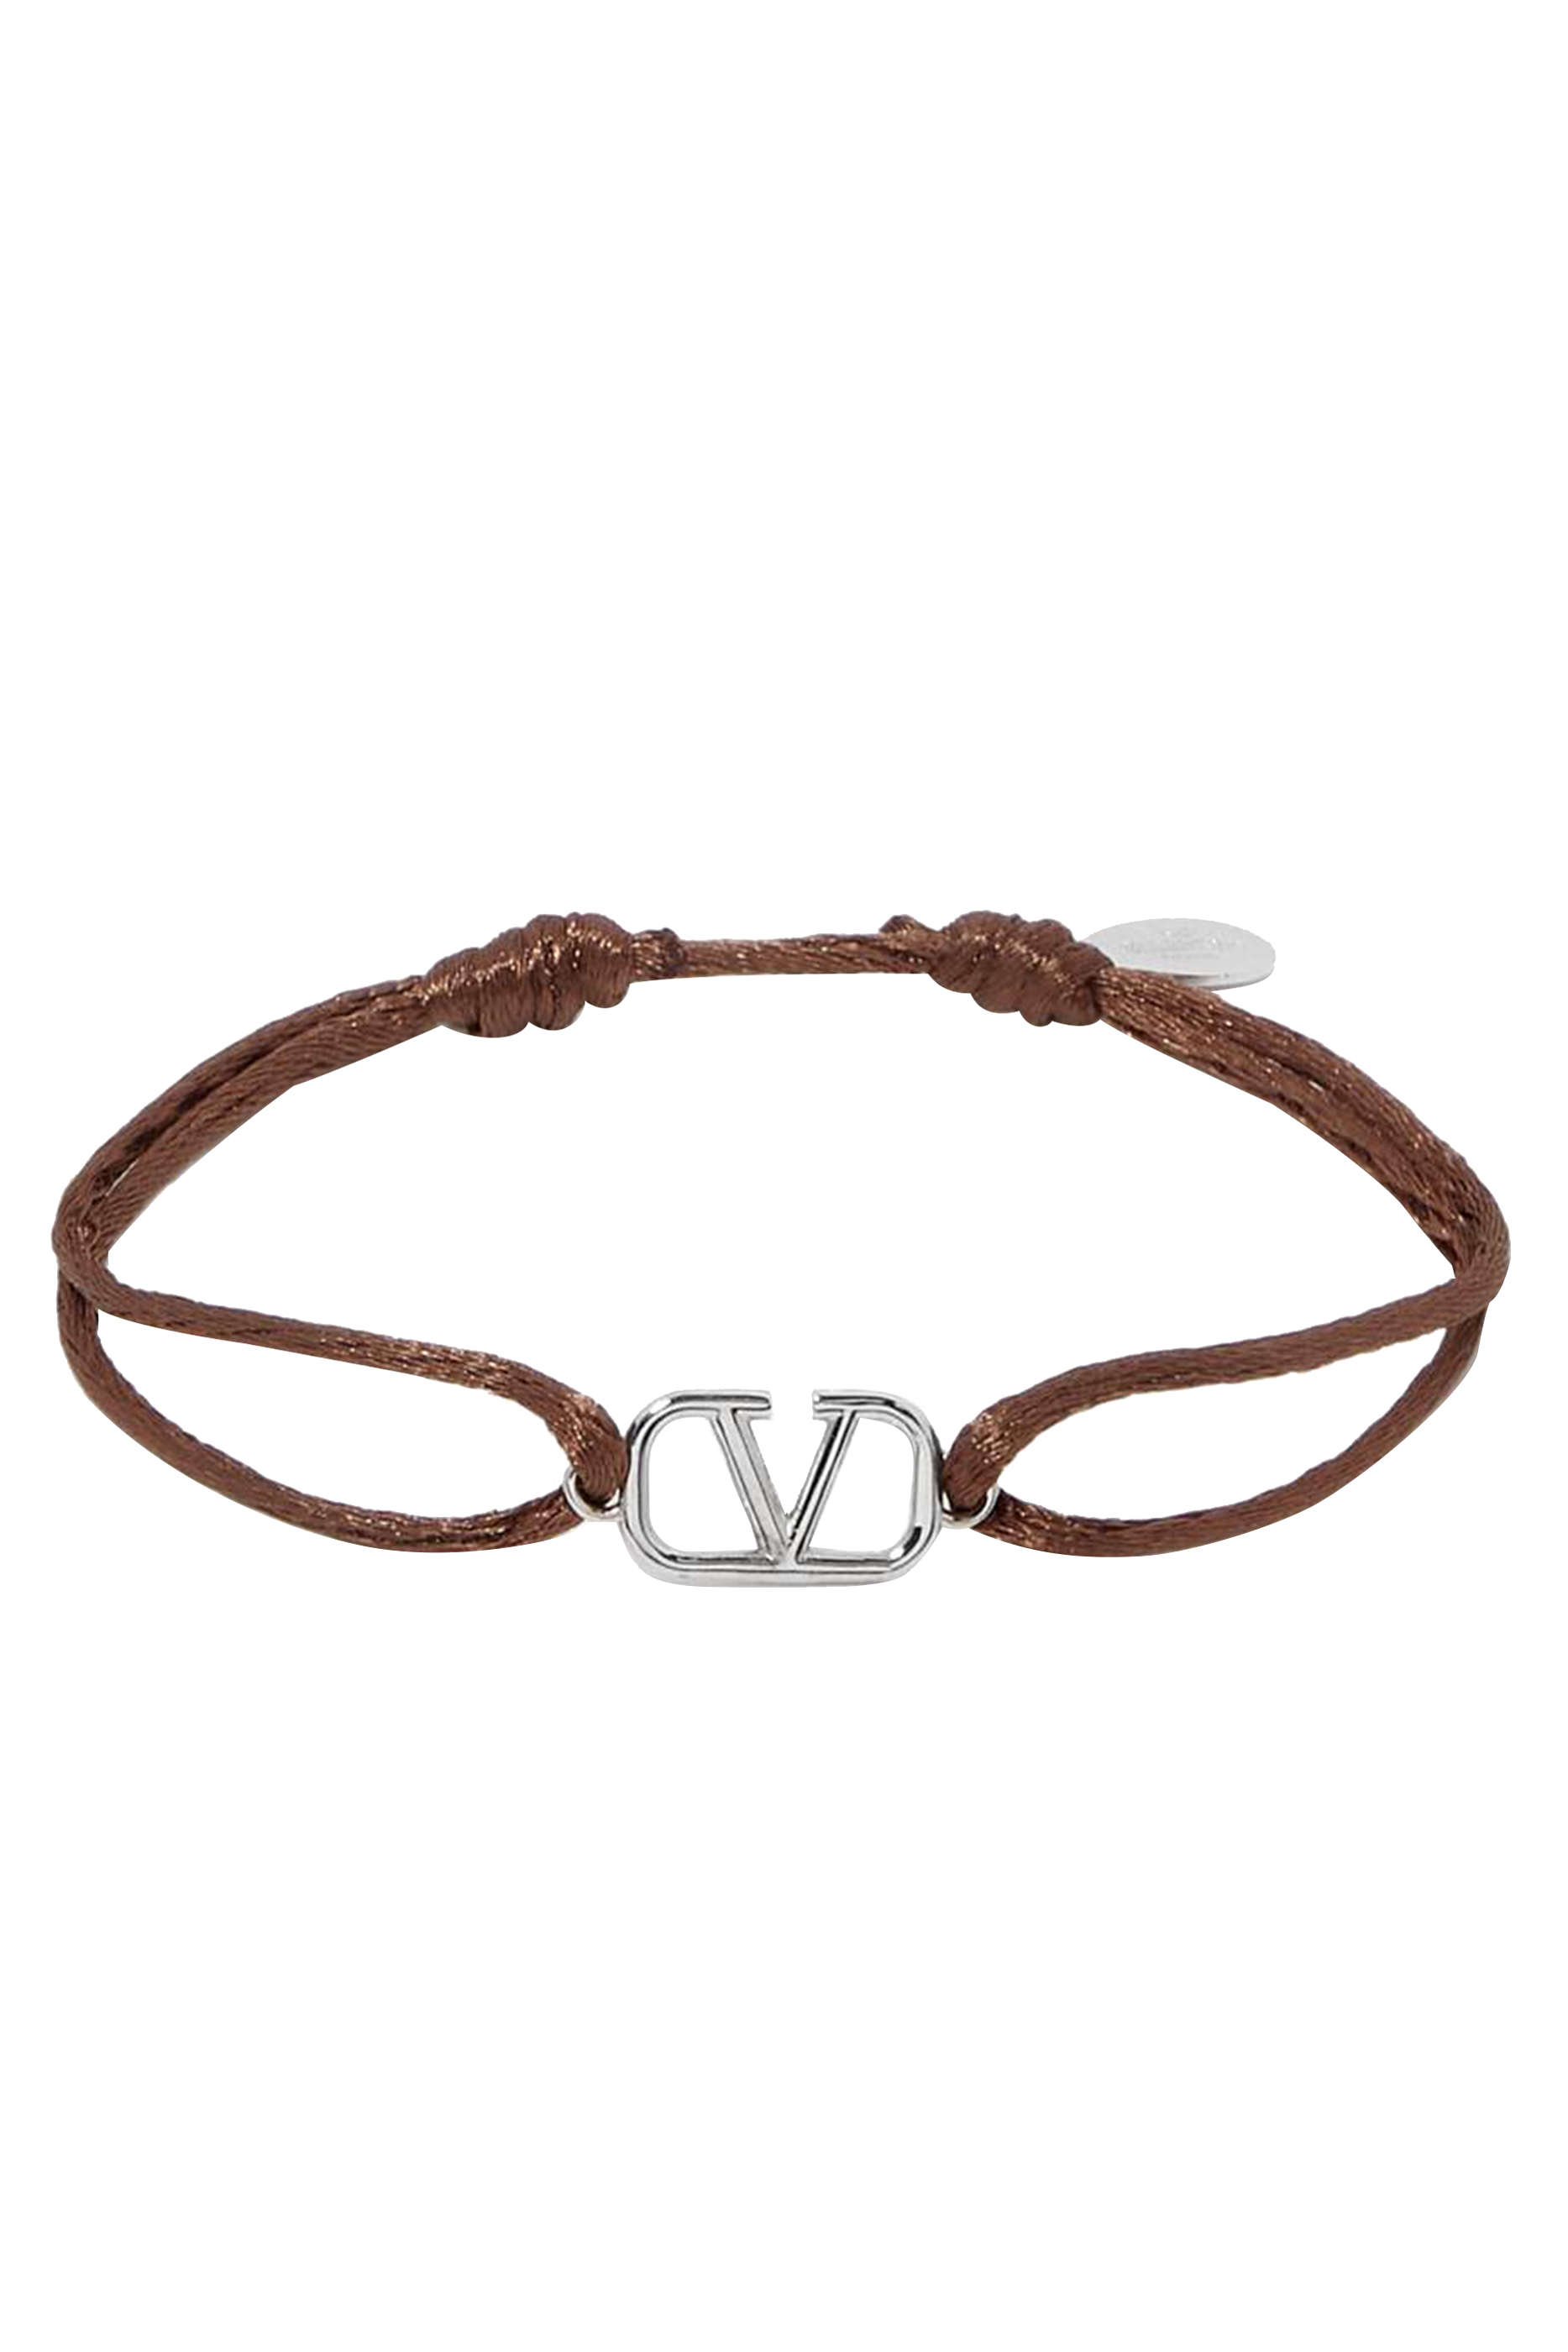 Shop Valentino Garavani Bracelets for Men Online in UAE | Ounass UAE